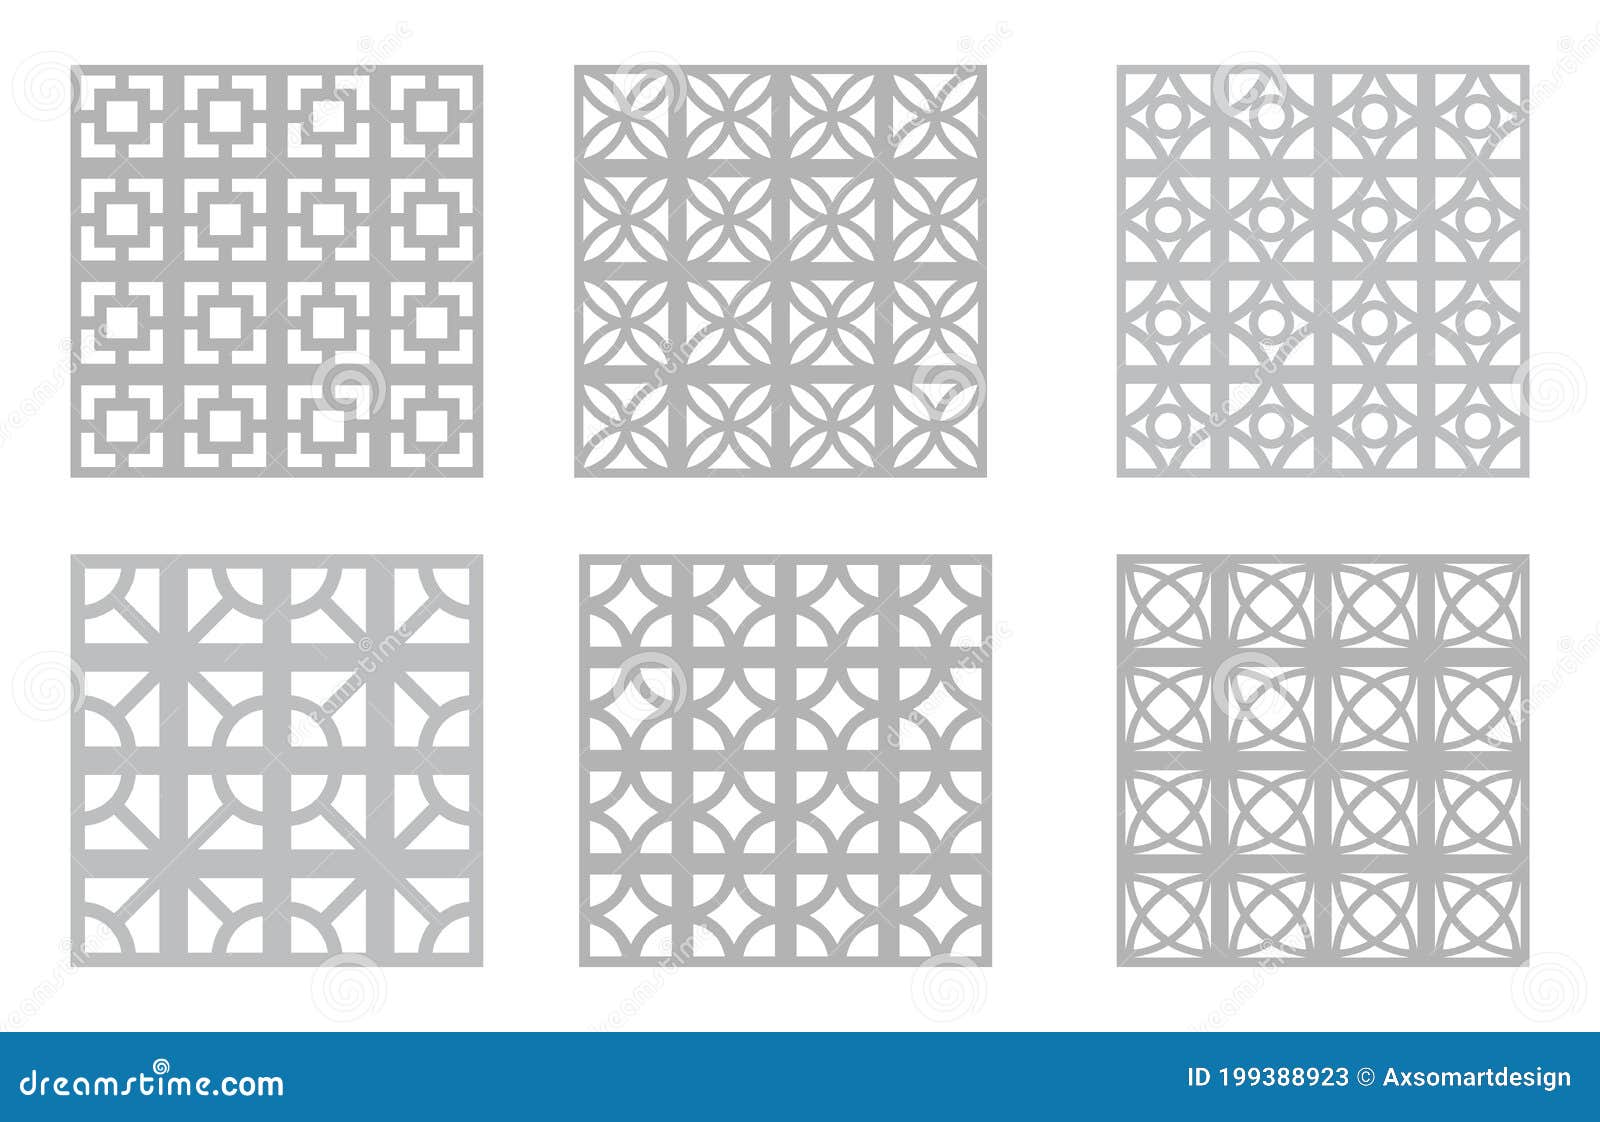 breeze block patterns | mid century modern concrete block | mcm  resources | 50s & 60s textures